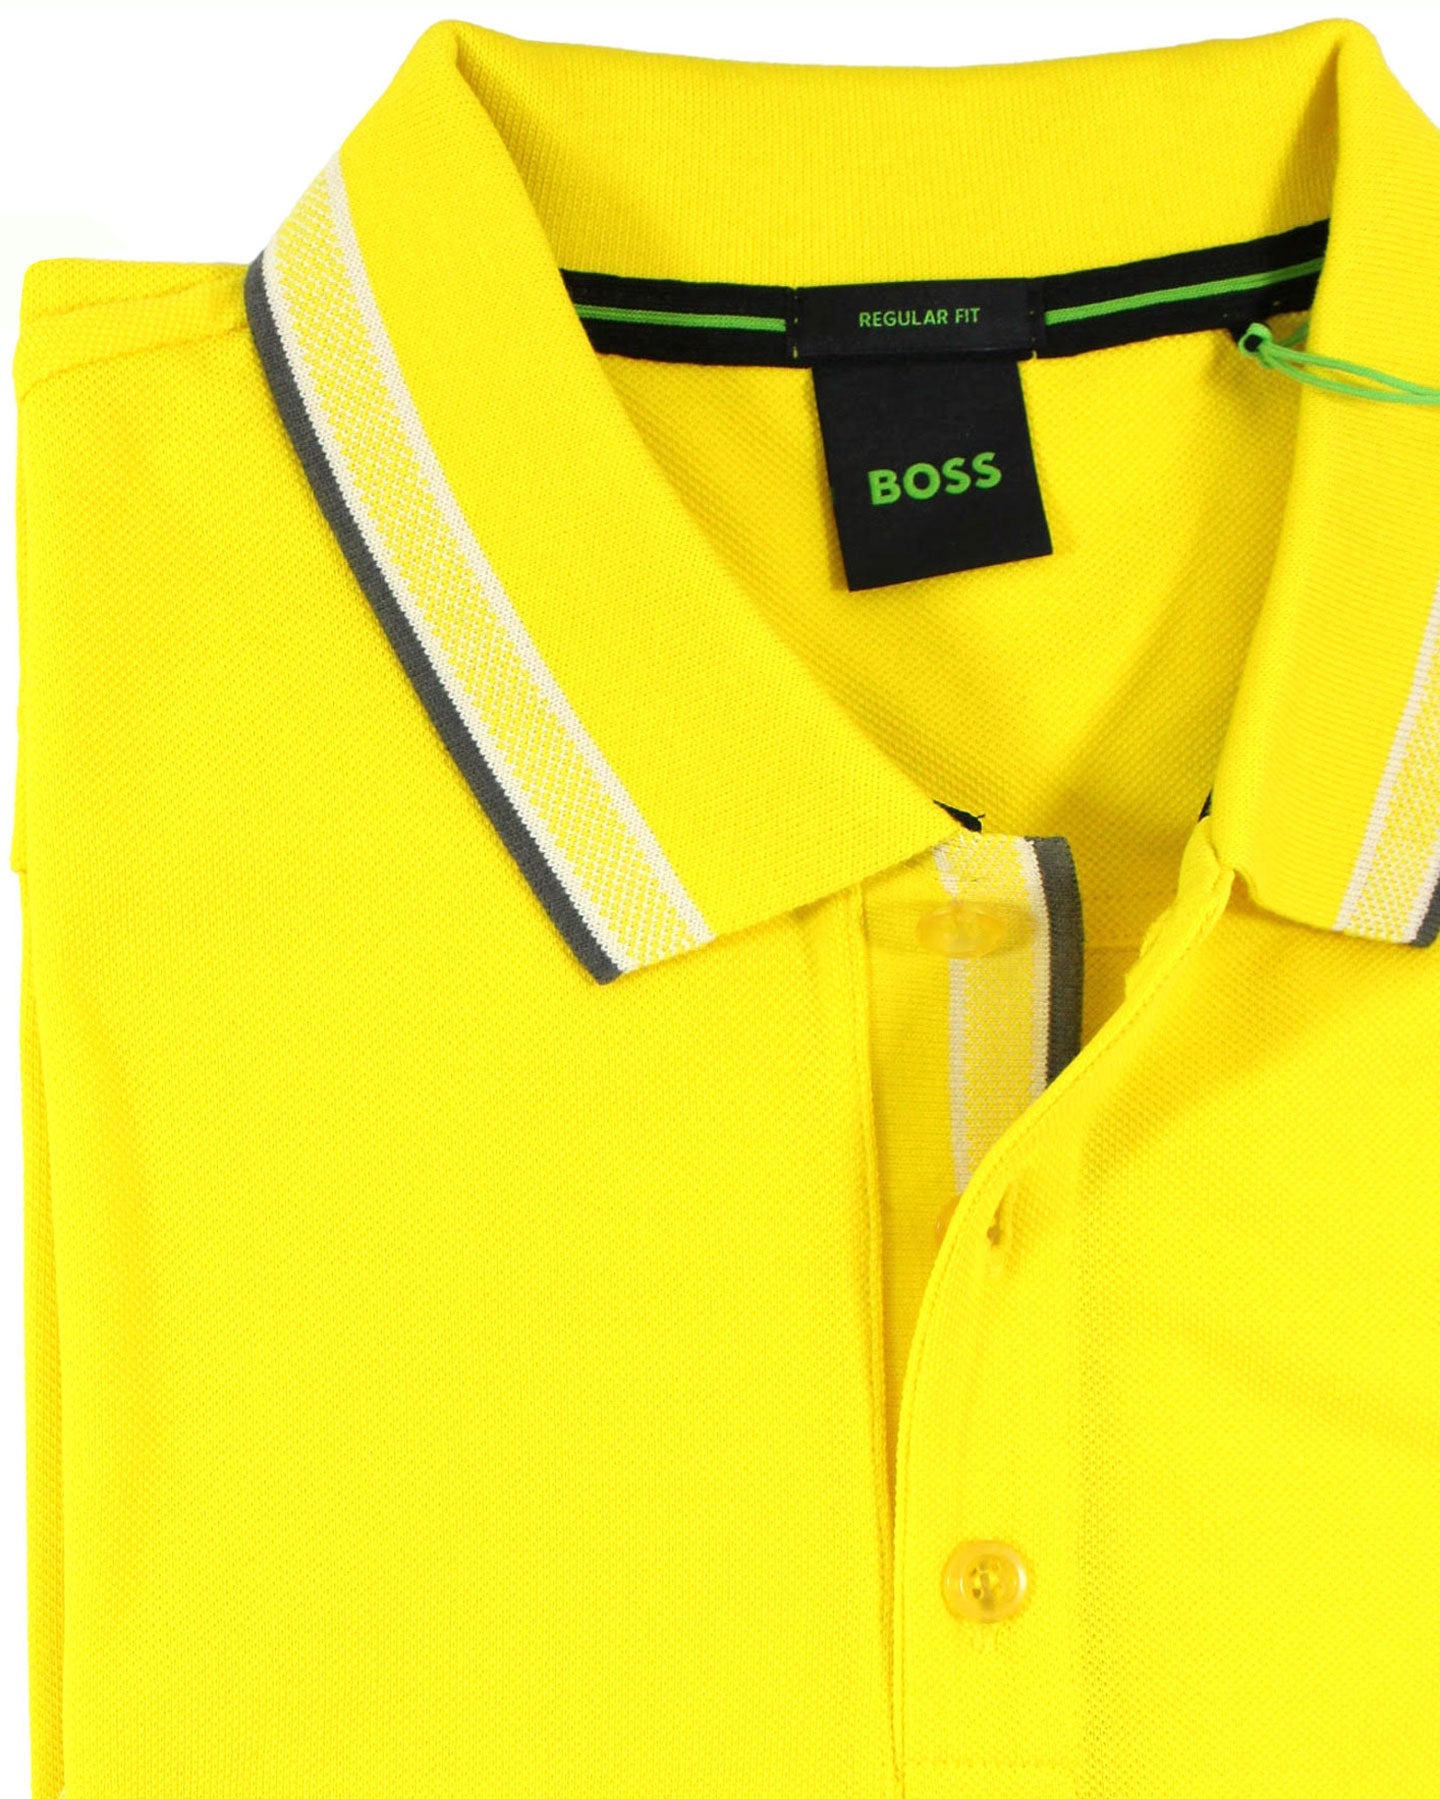 Hugo Boss Polo Shirt Regular Fit Yellow Stretch Cotton L